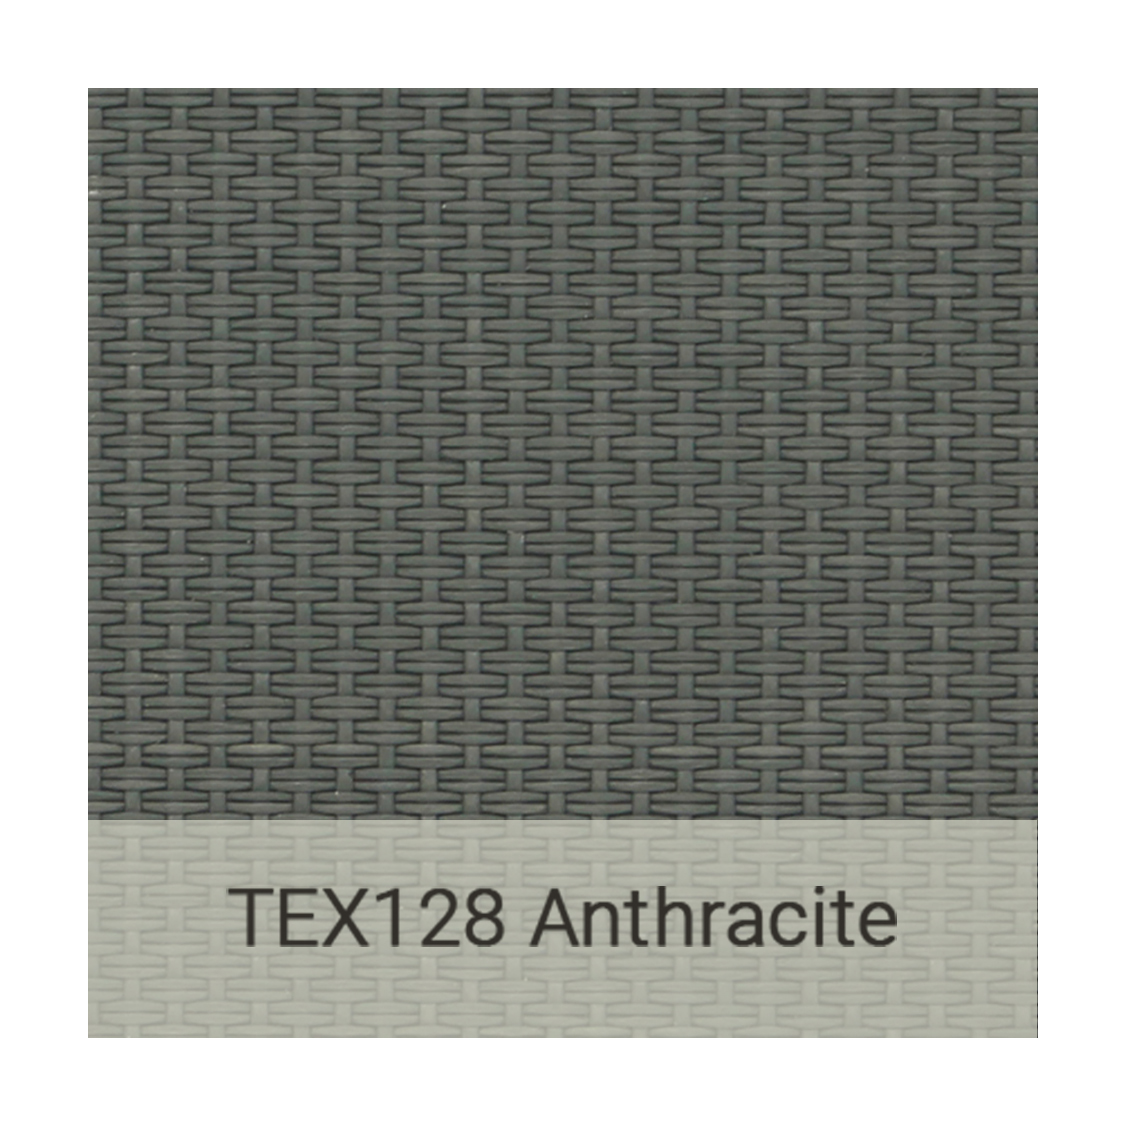 Kingston Casual textiline-tex128-anthracite